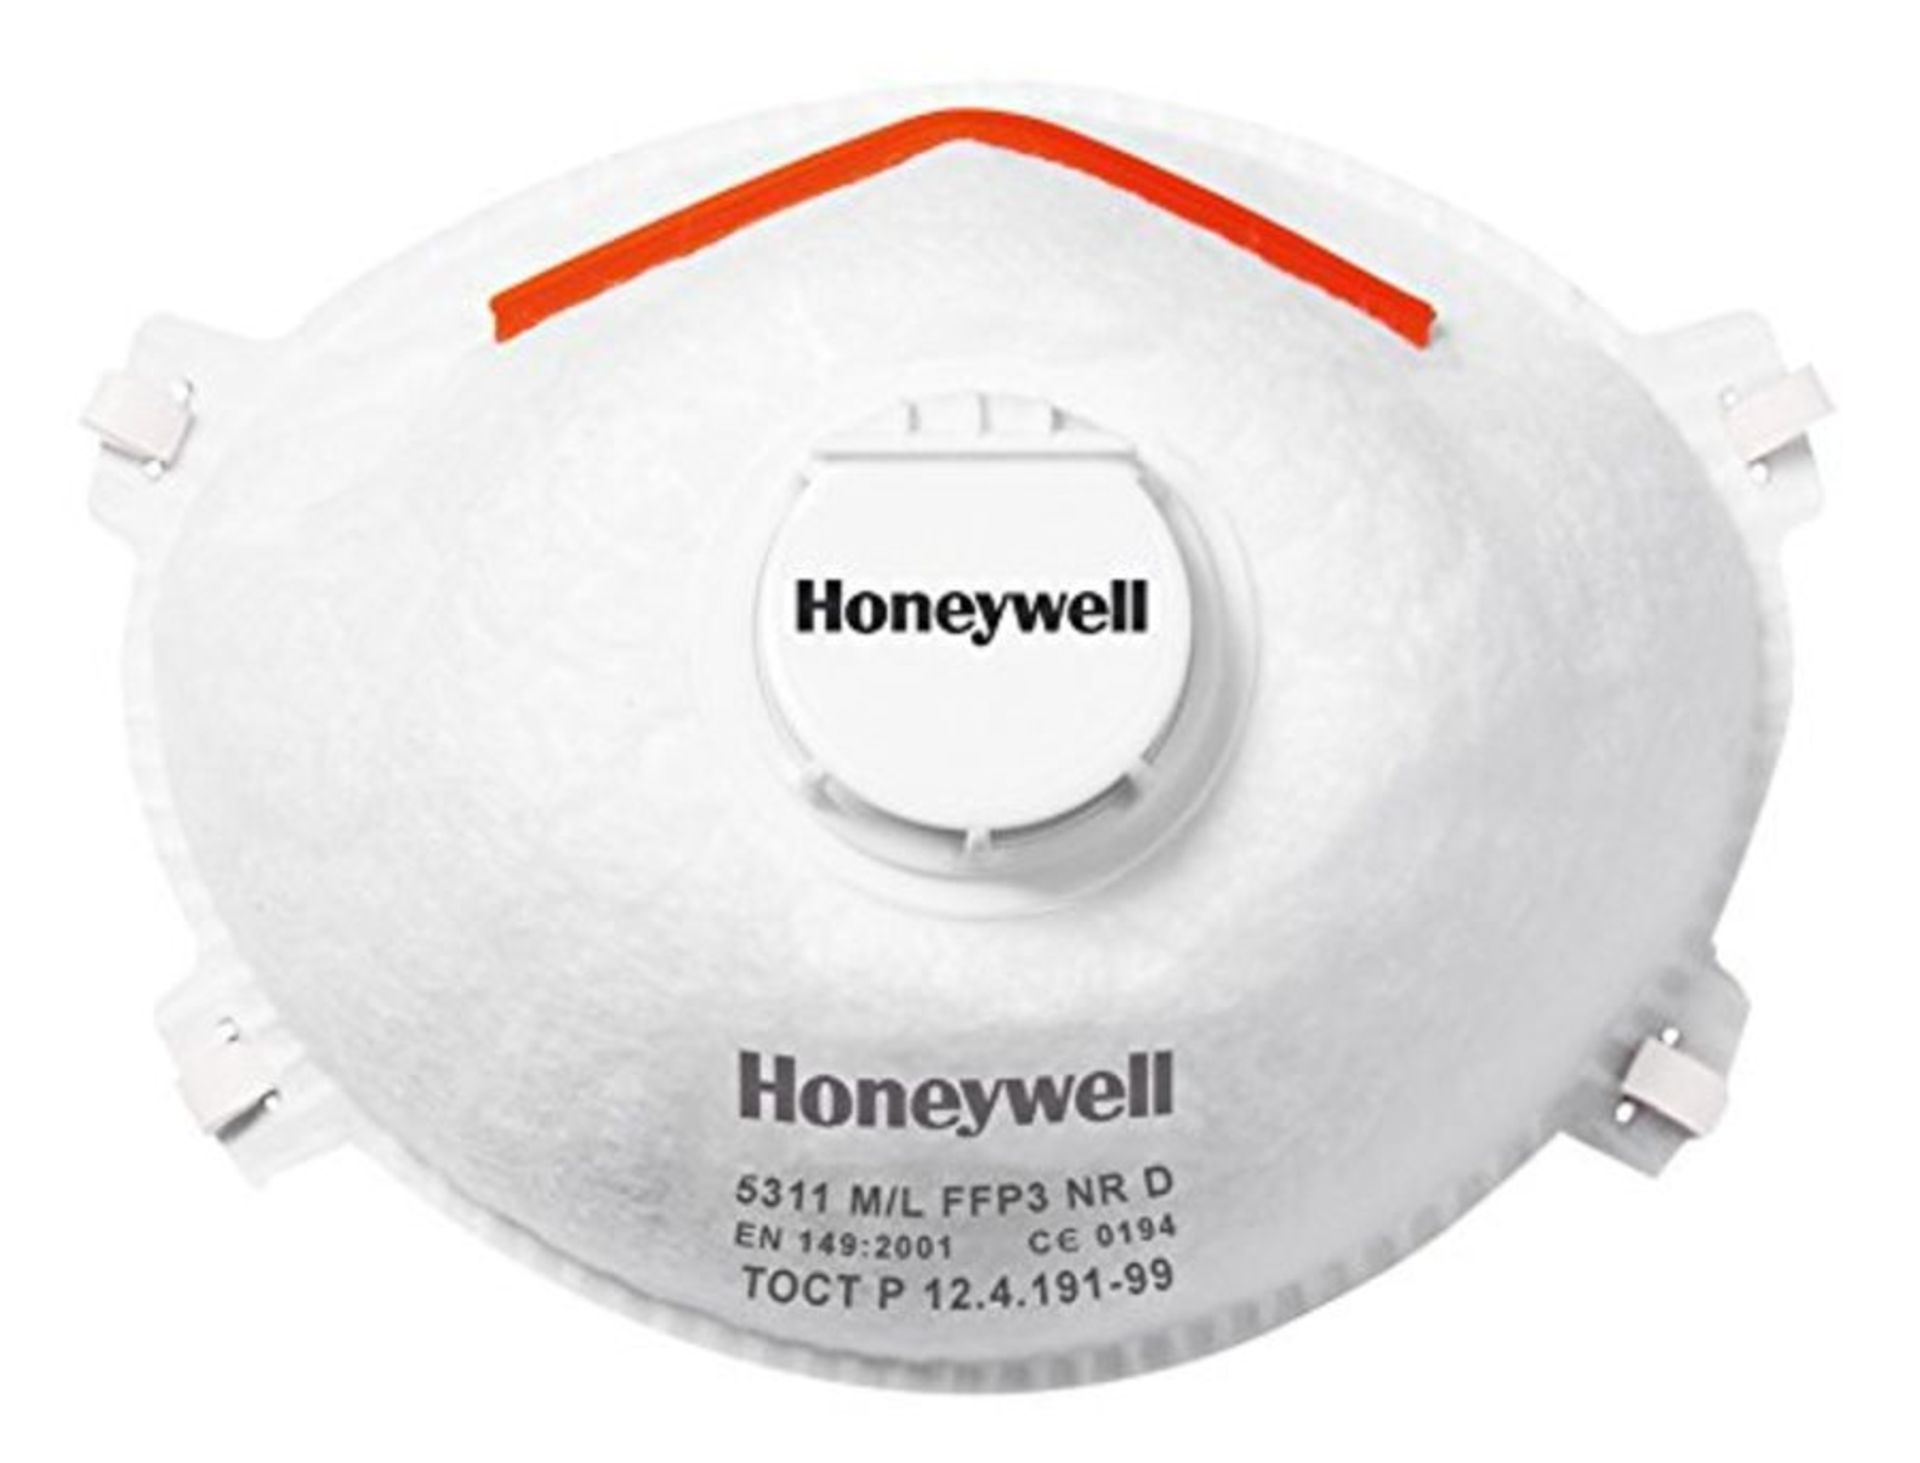 Honeywell 1015635 Comfort 5311 Single-Use Moulded Mask with Valve FFP3V NR D - Size M/